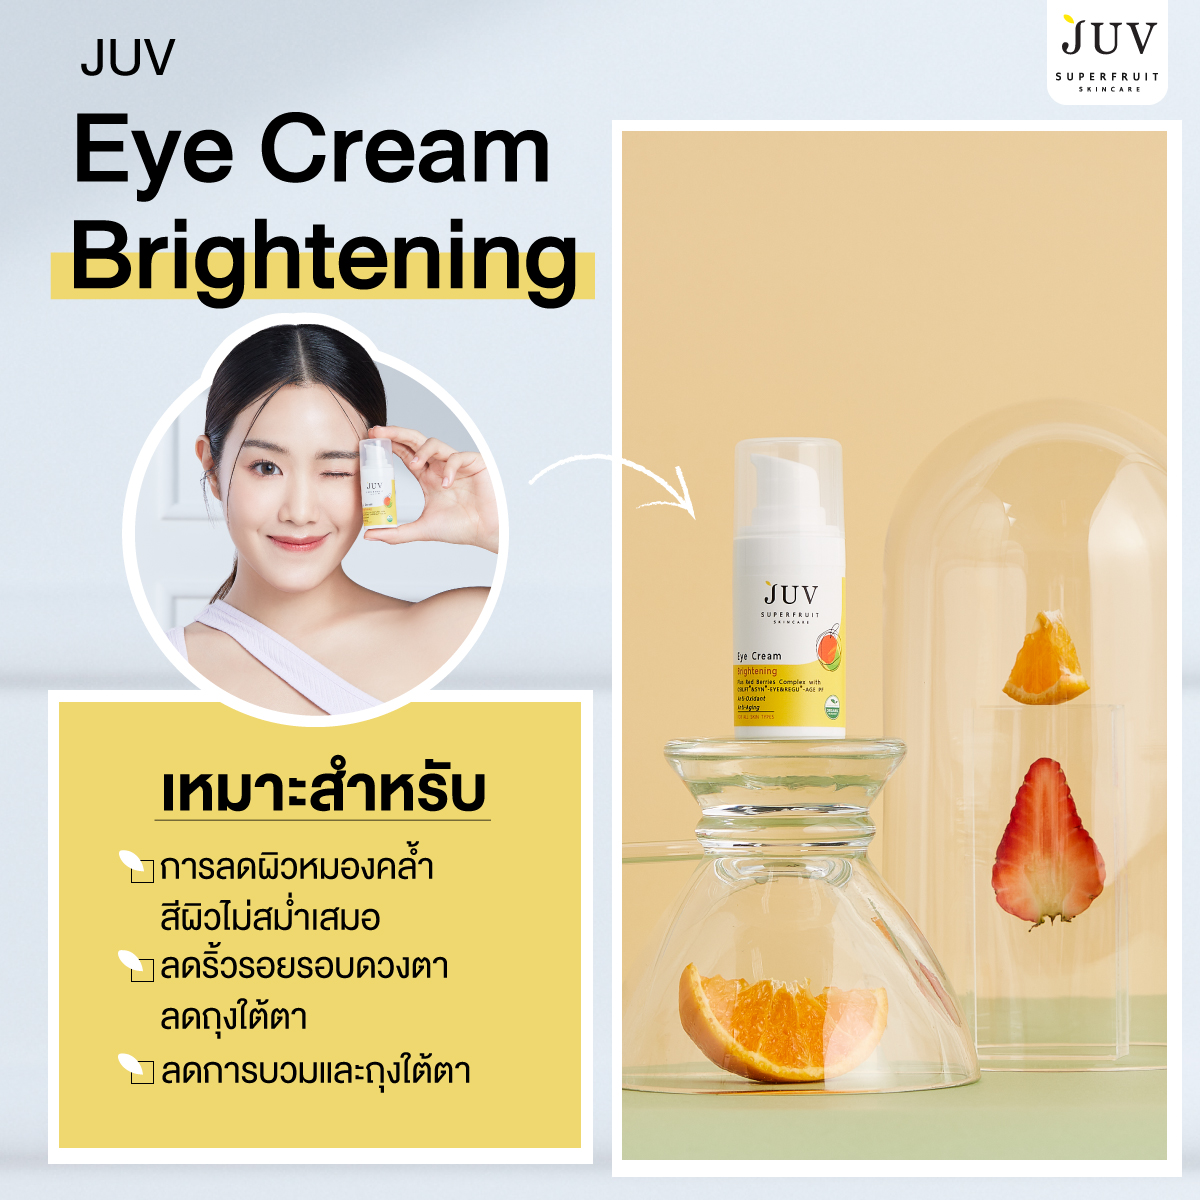 JUV Eye Cream Brightening  ผิวรอบดวงตาเนียนใส กระชับใต้ตา